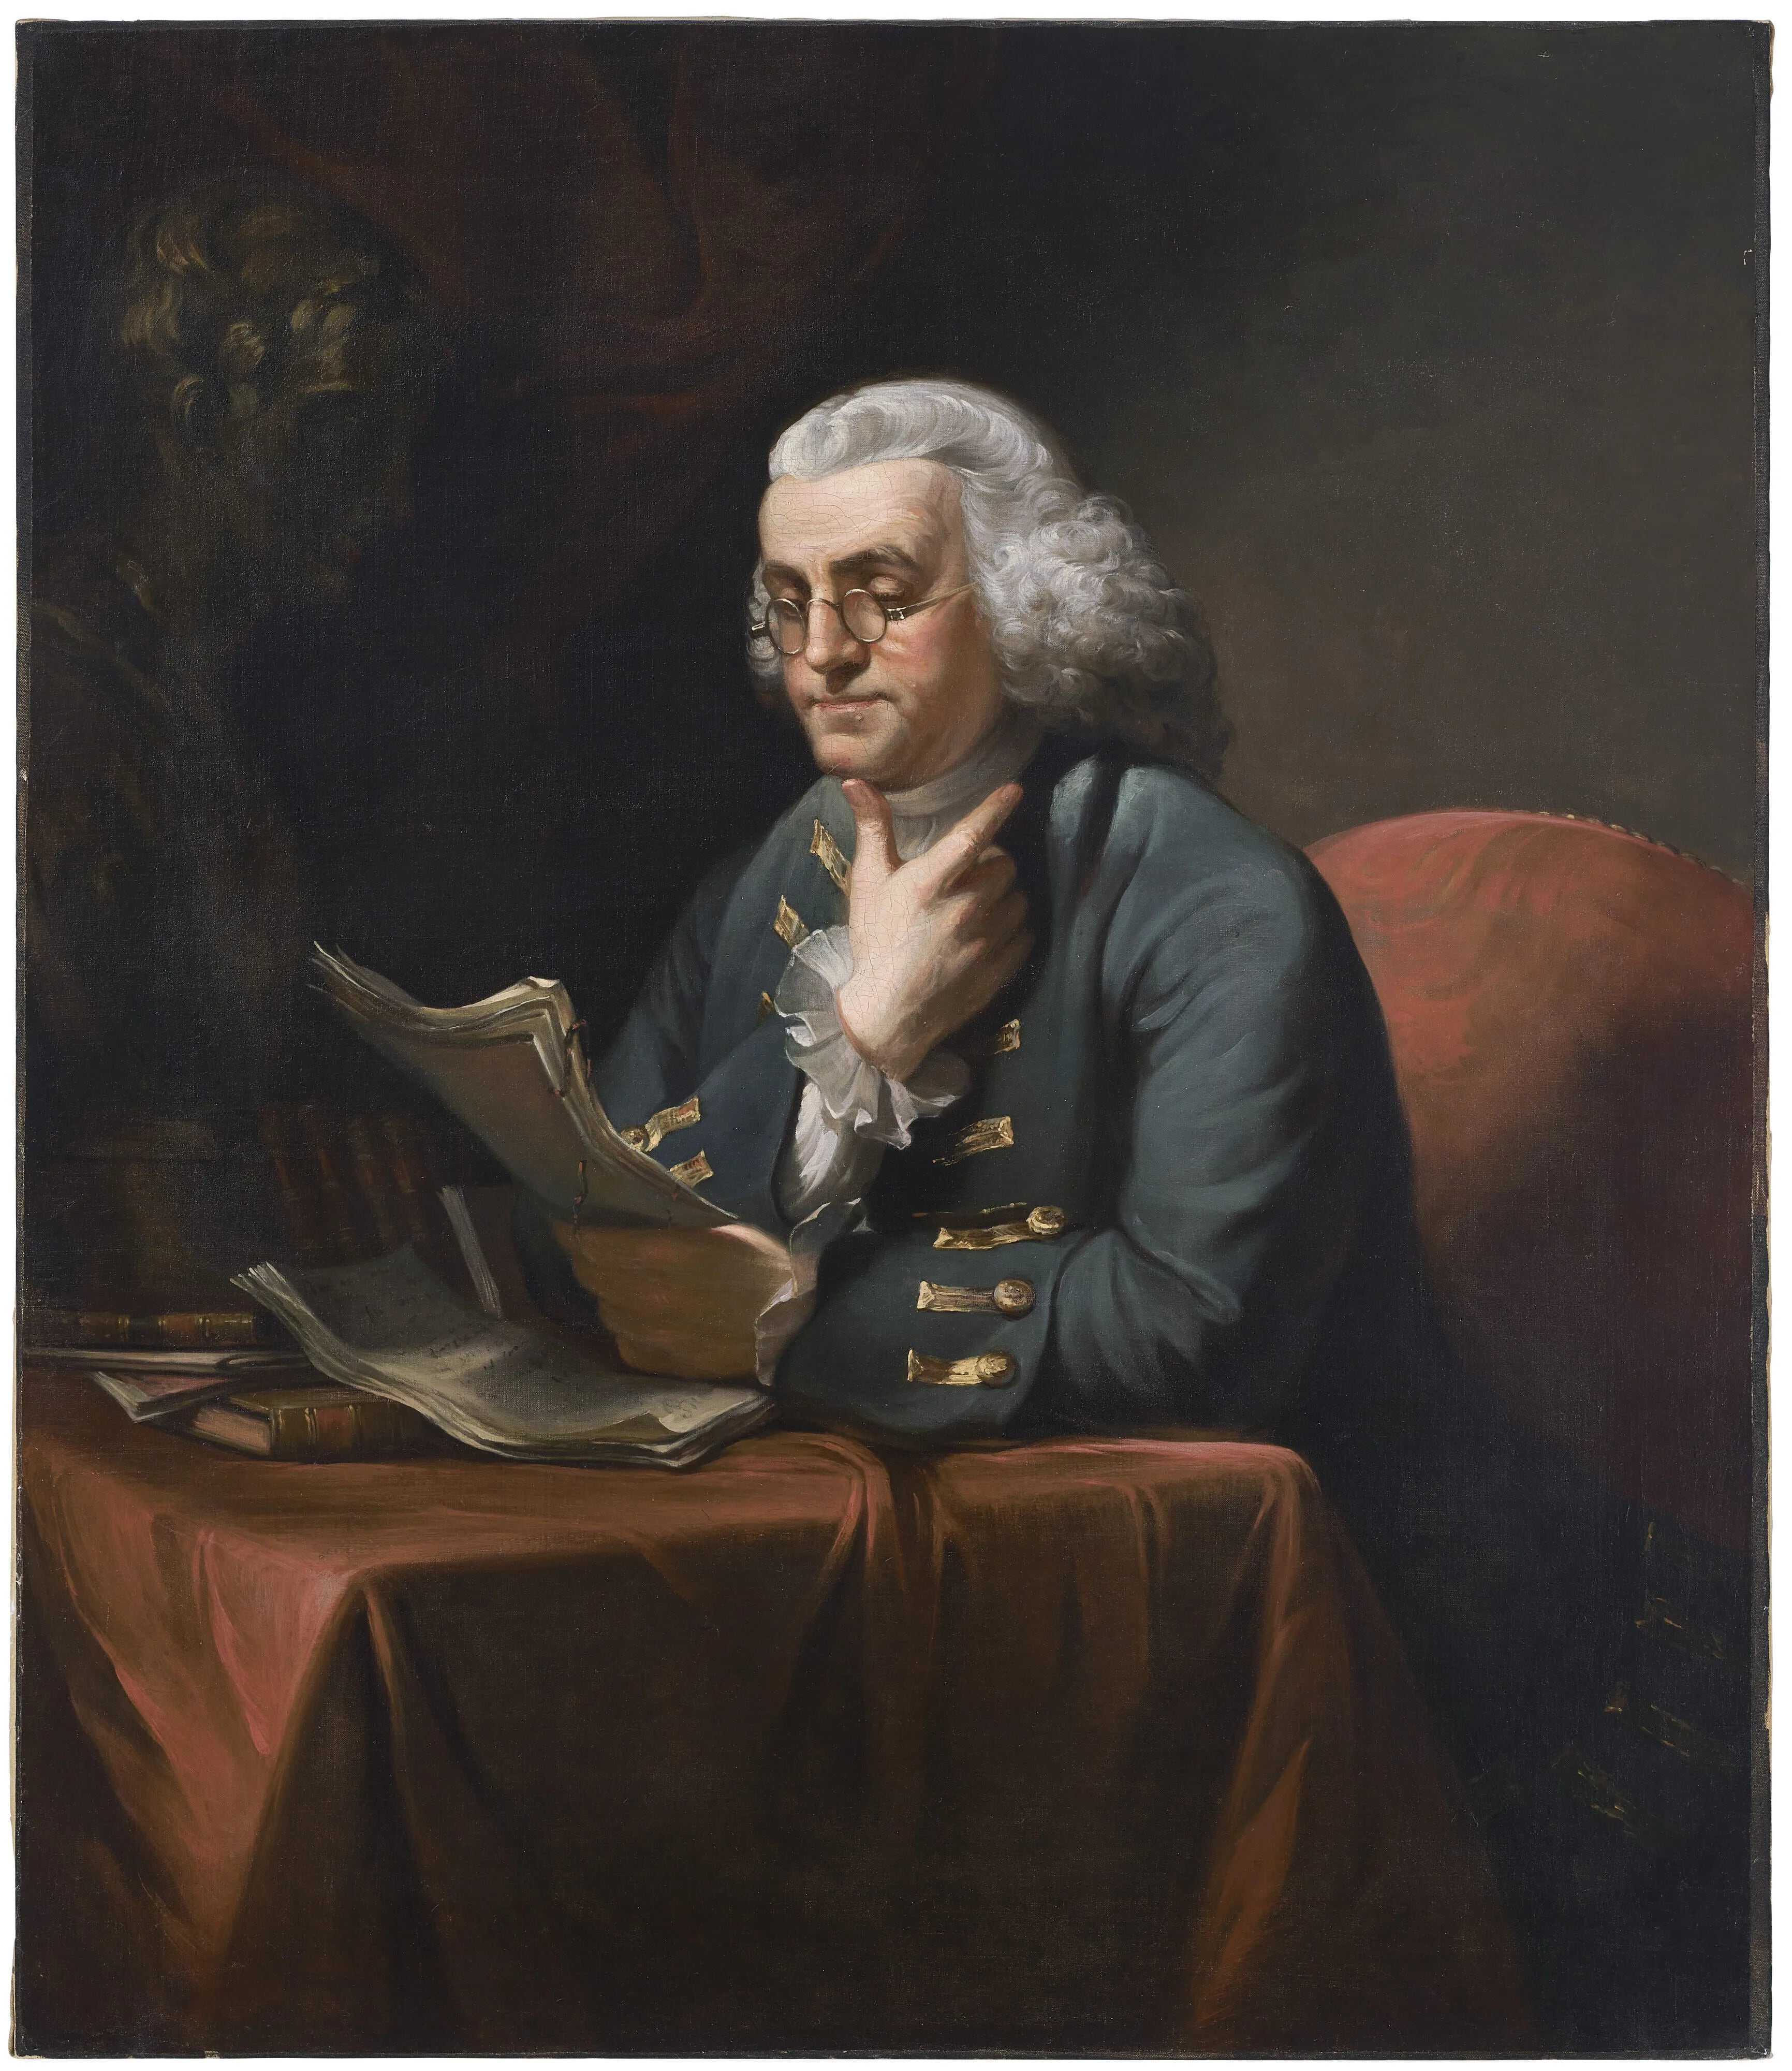 Ben Franklin's descendants and Christie's are auctioning a portrait of him